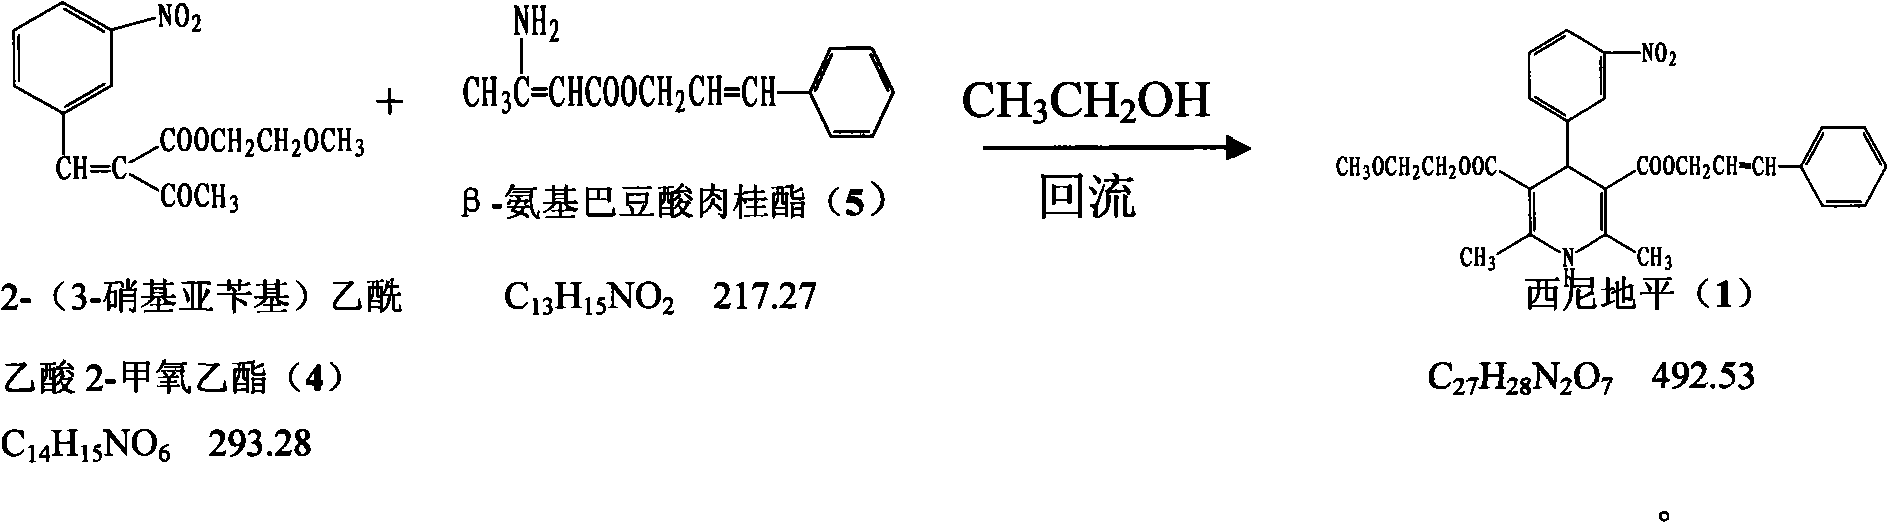 Method for preparing cilnidipine used as dihydropyridine calcium antagonist